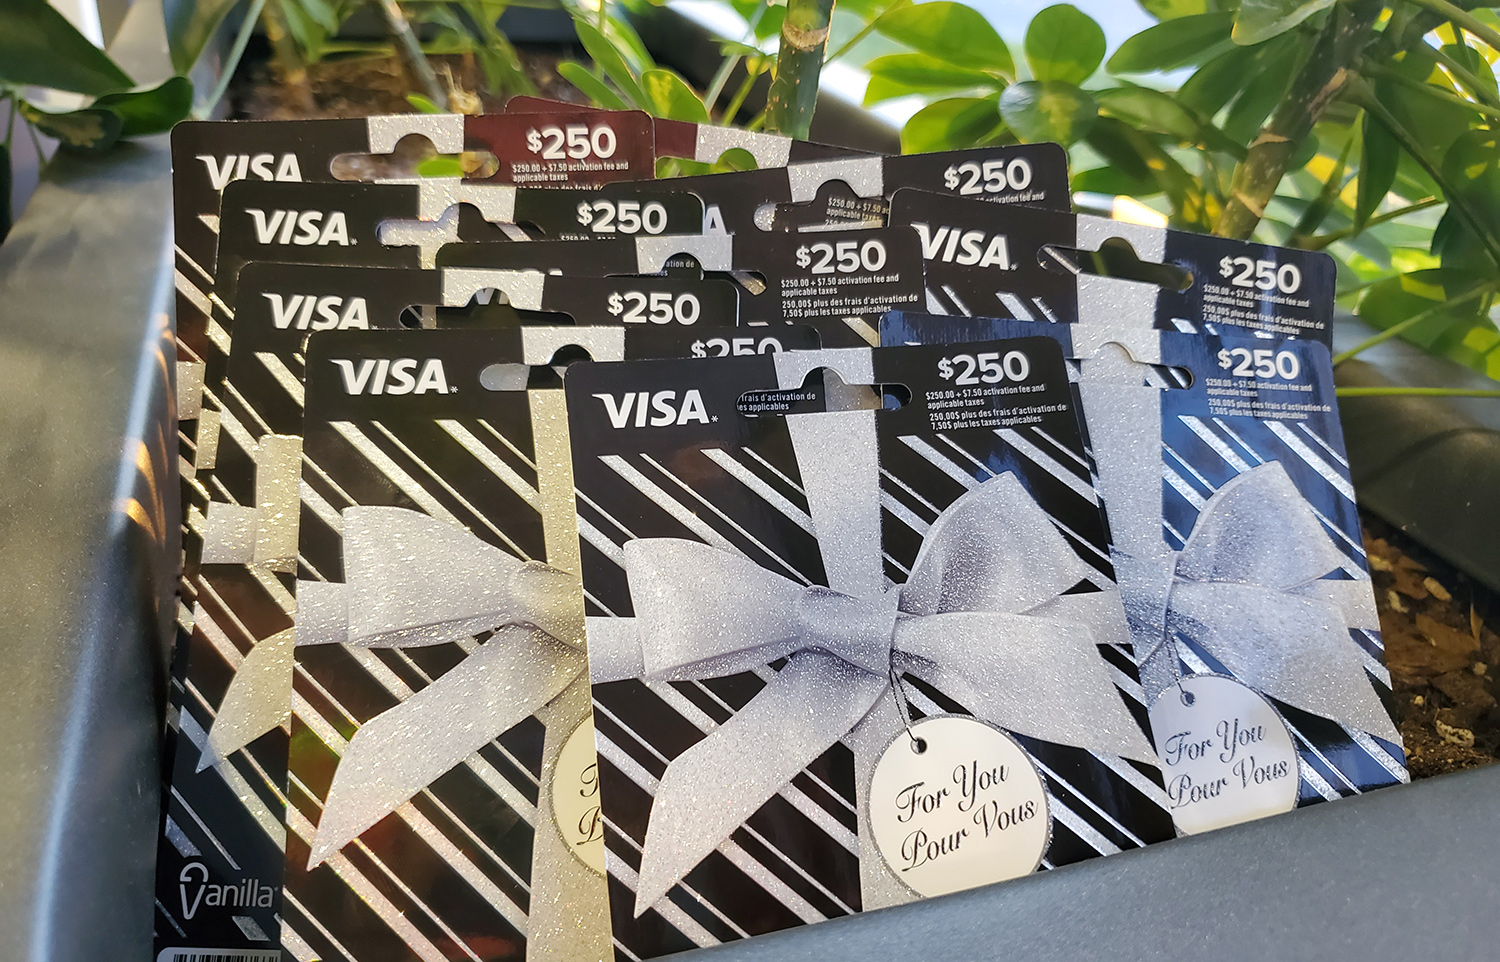 Image of the Vanilla Visa Prepaid card contest prizes